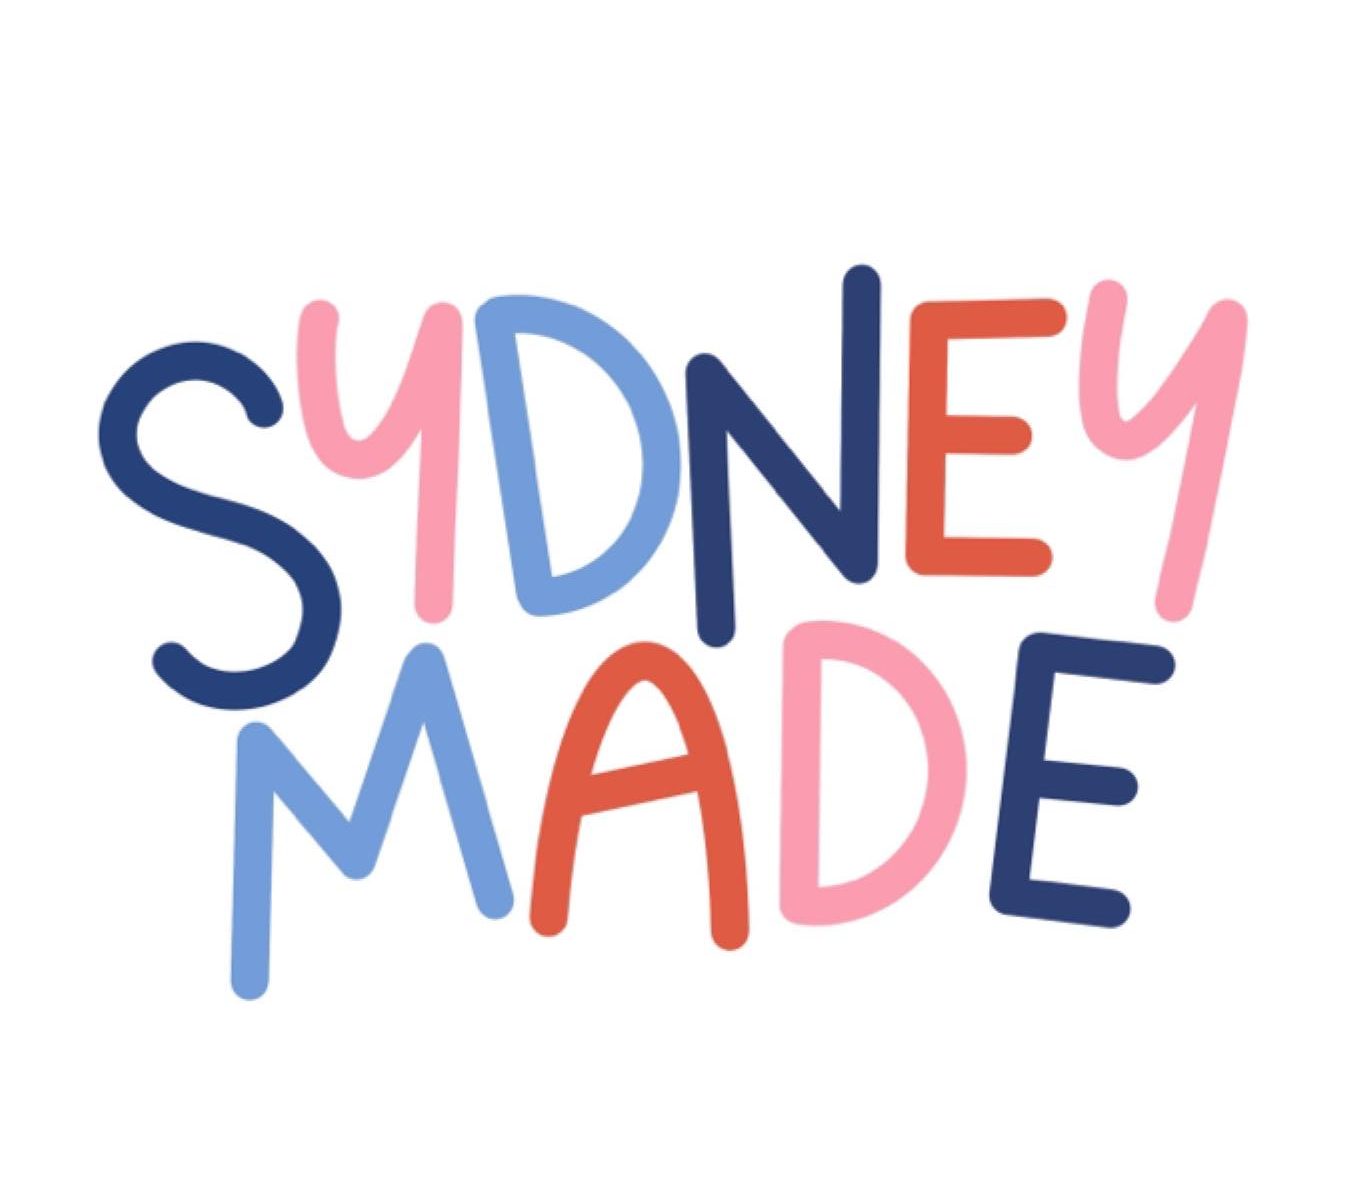 Sydney Made Art and Design Markets